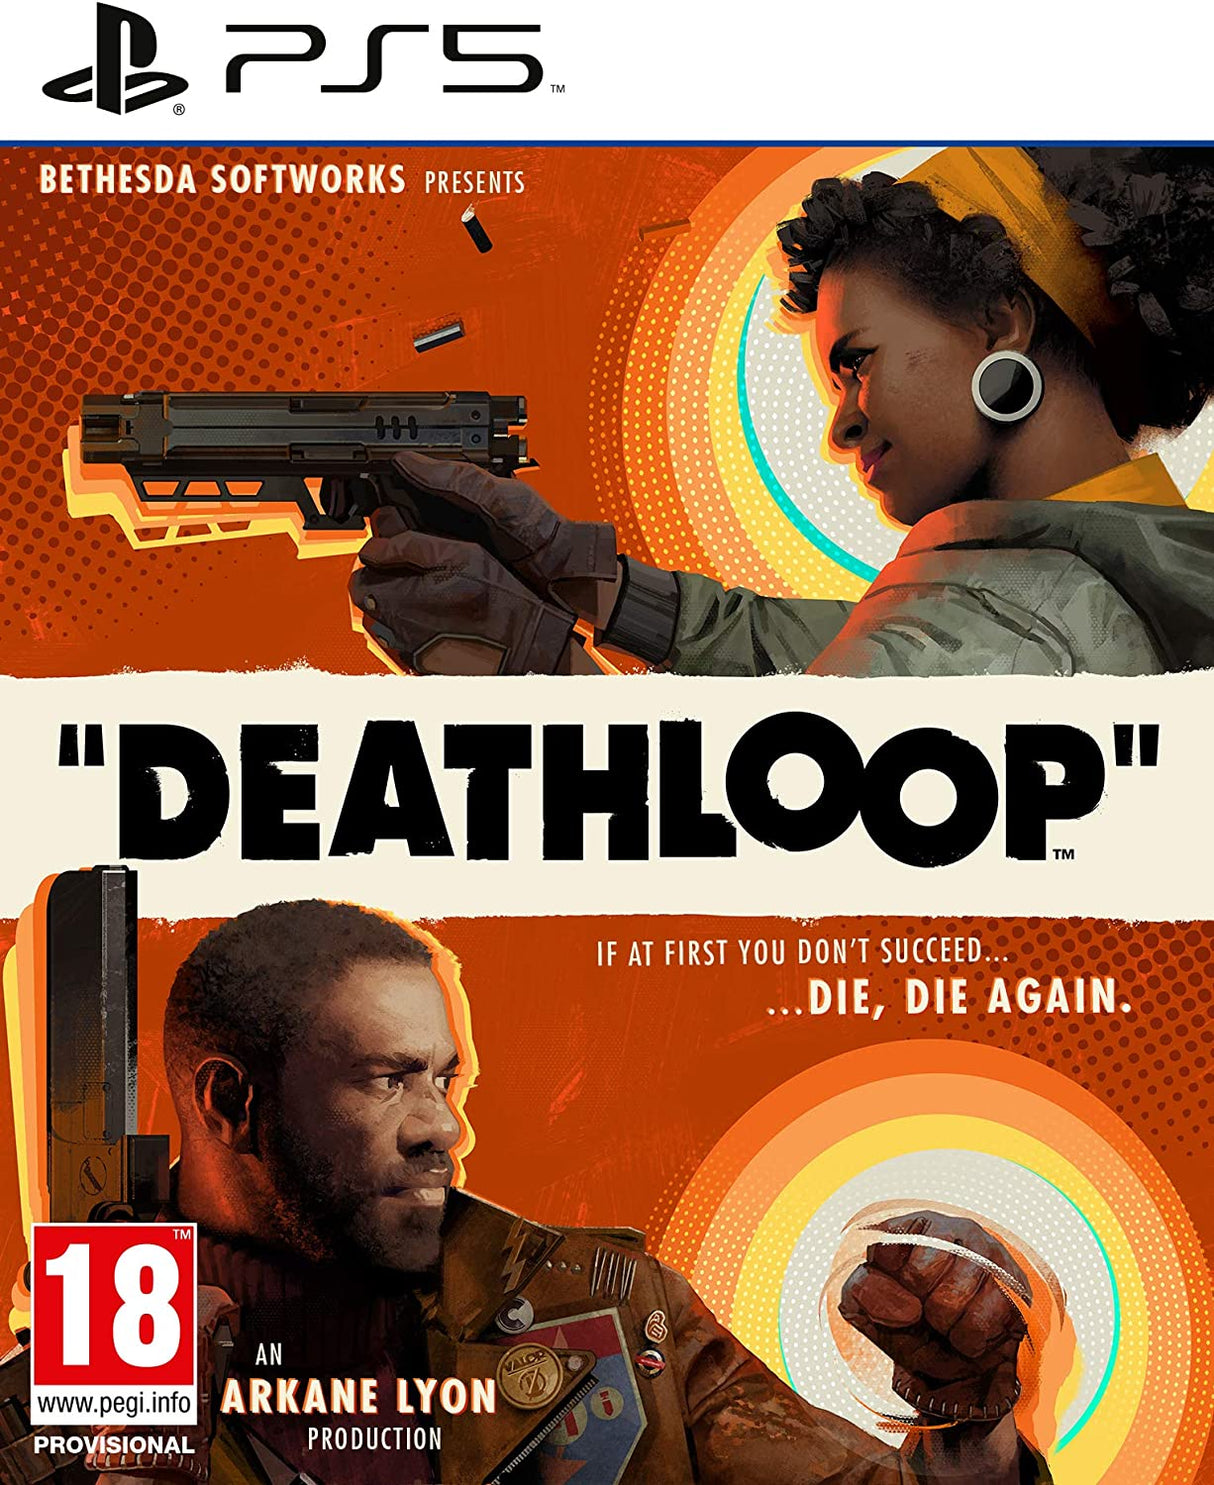 Deathloop Standard Edition - PlayStation 5 “Region 2” - Level UpBethesdaPlaystation Video Games711719762690